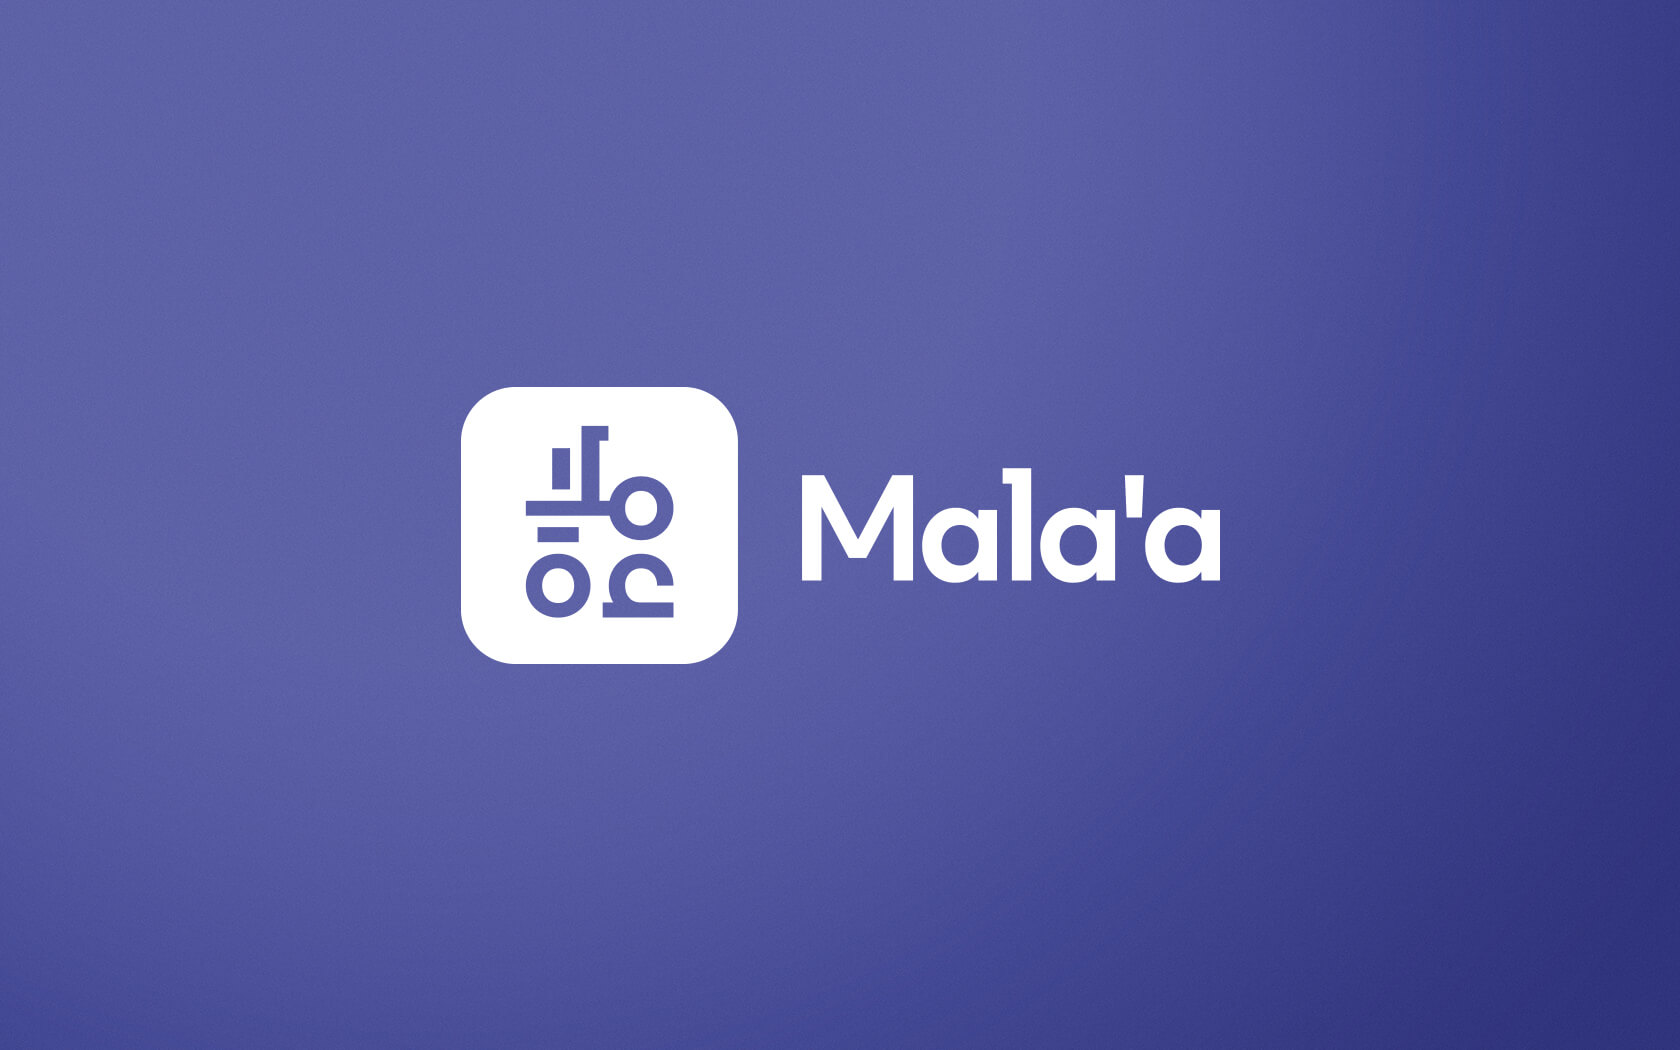 Mala'a. Brand logo in white